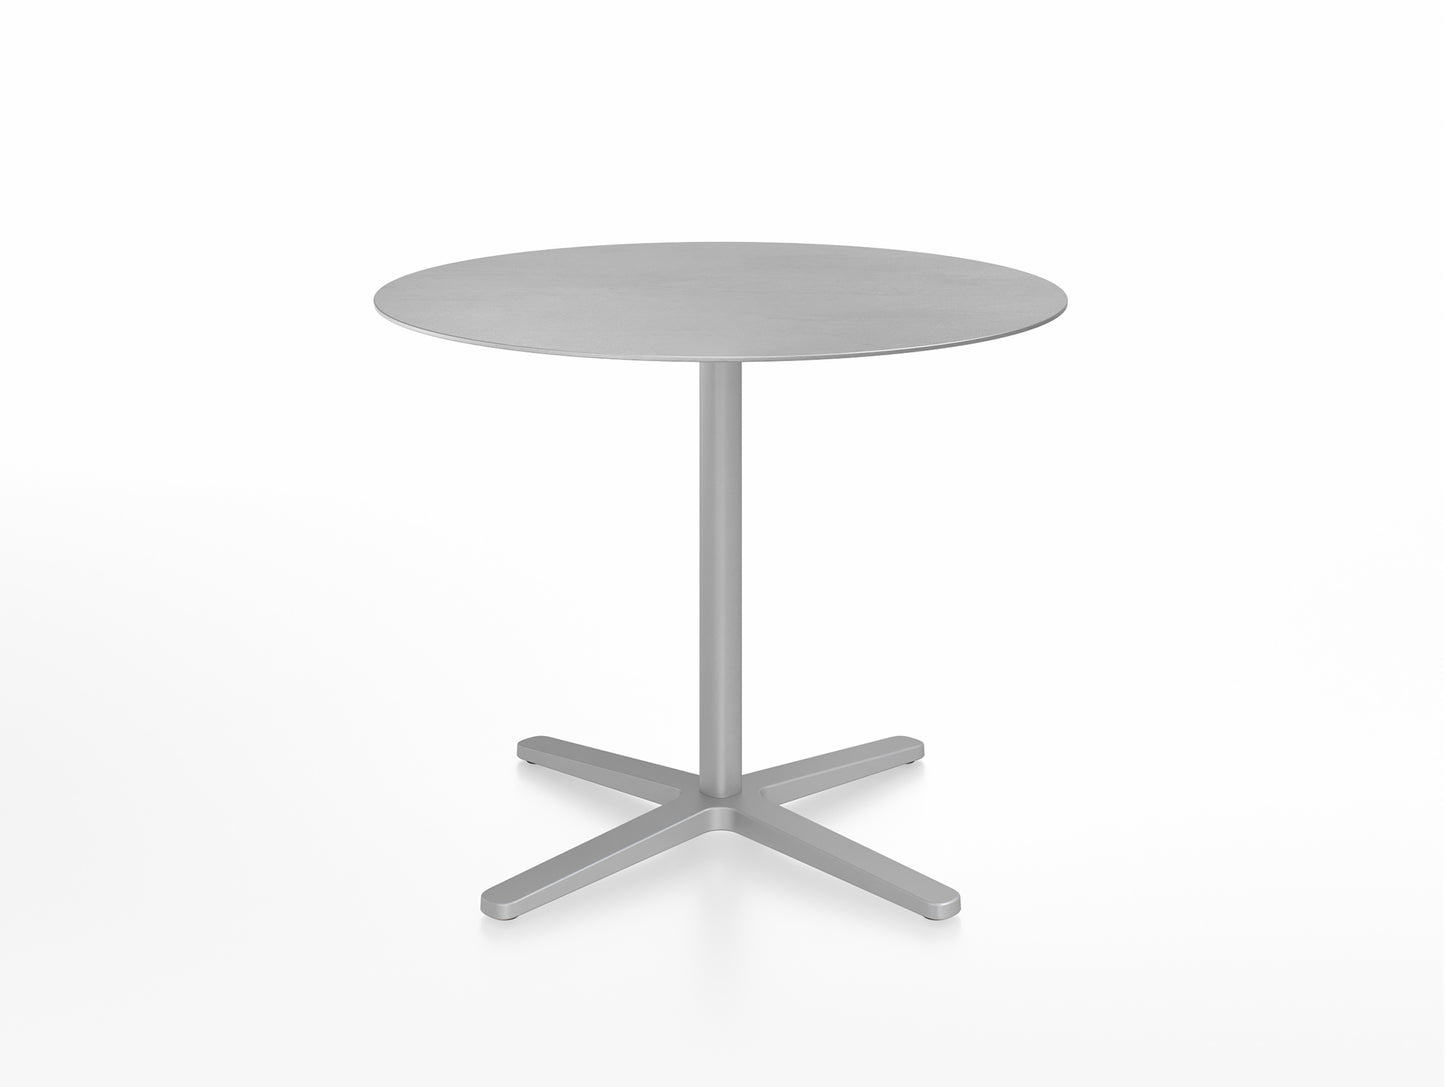 2 Inch Outdoor Cafe Table - X Base by Emeco - Aluminium Top / Aluminium Base / Diameter 91